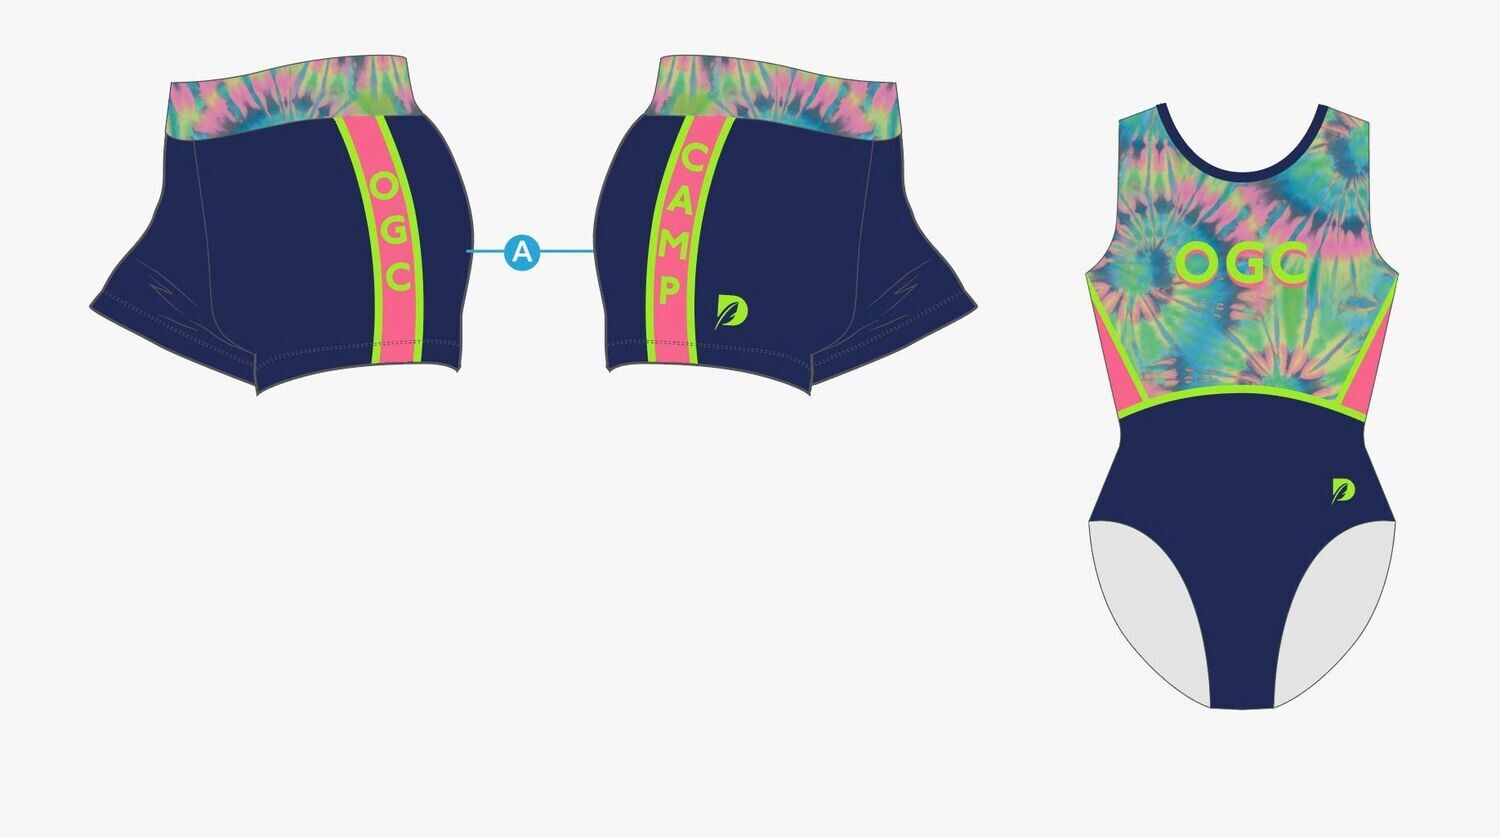 OGC camp Summer 2022 collection  matching short shorts $29